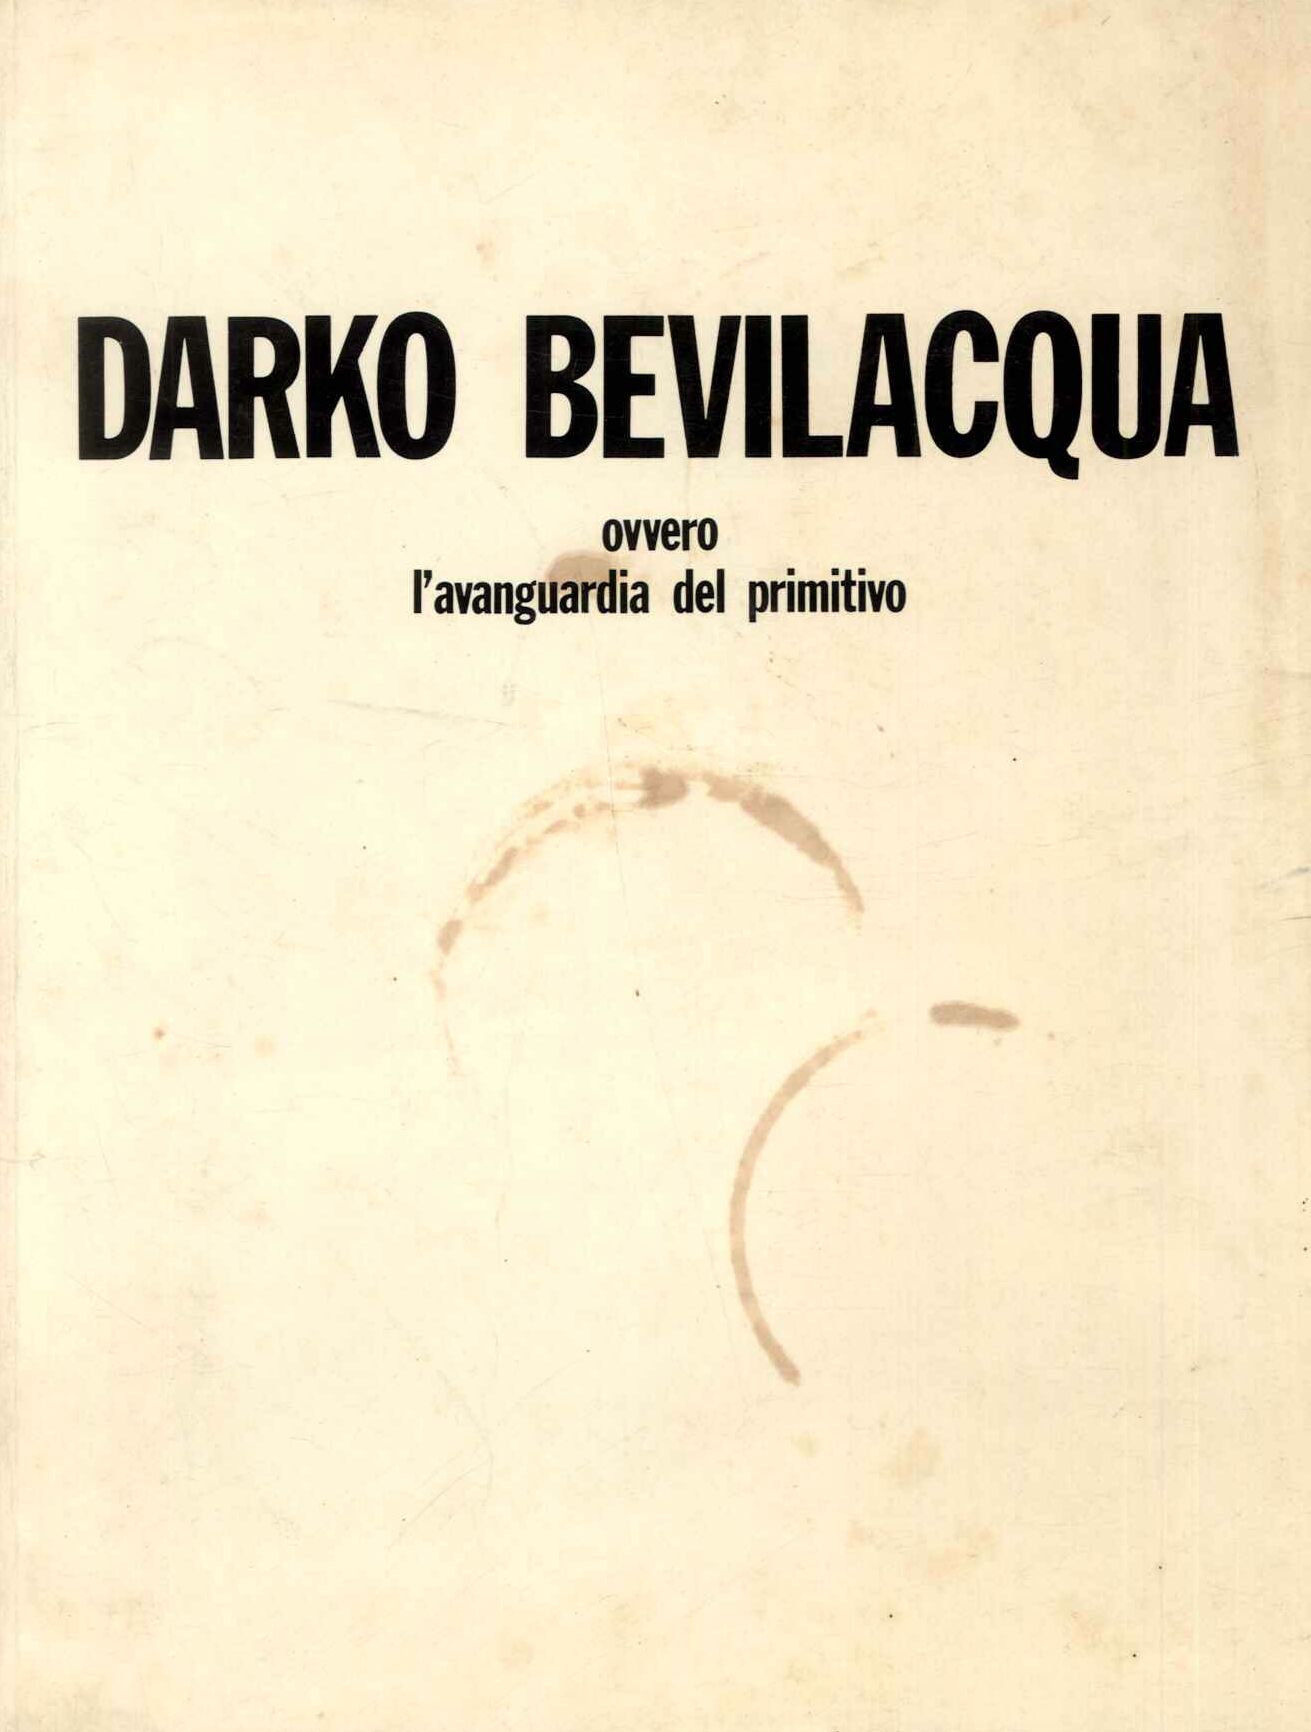 Darko Bevilacqua Ovvero l'avanguardia del primitivo